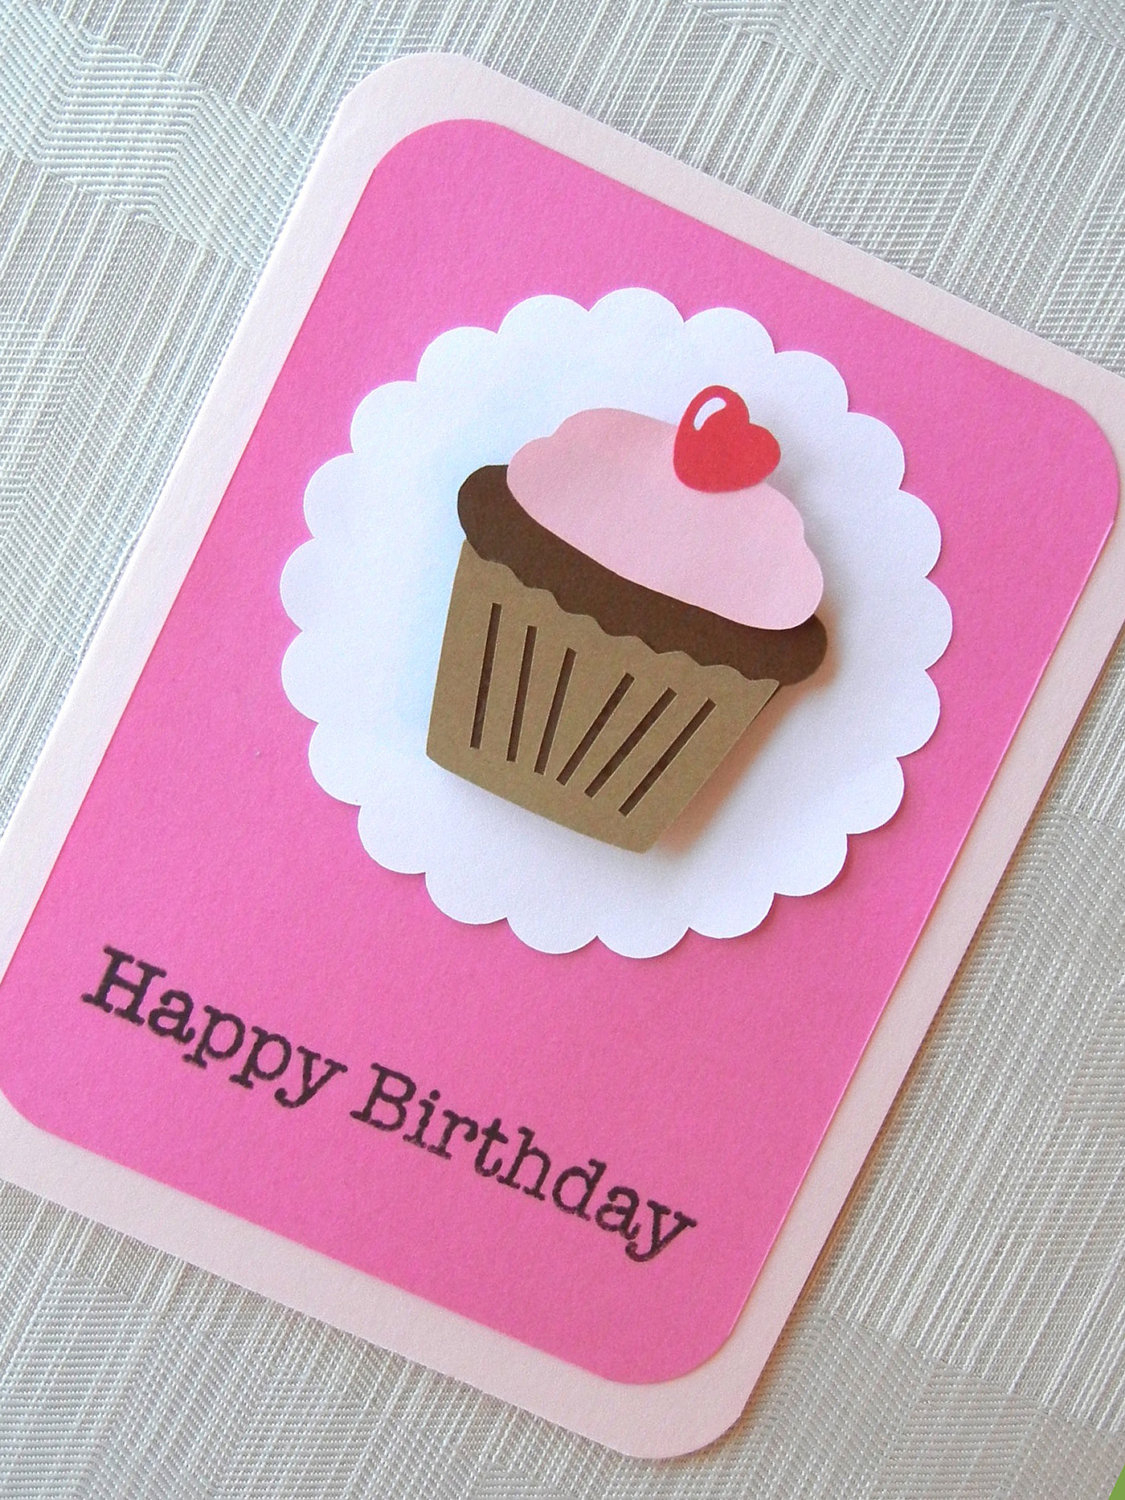 Homemade Happy Birthday Card Ideas Easy Diy Birthday Cards Ideas And Designs